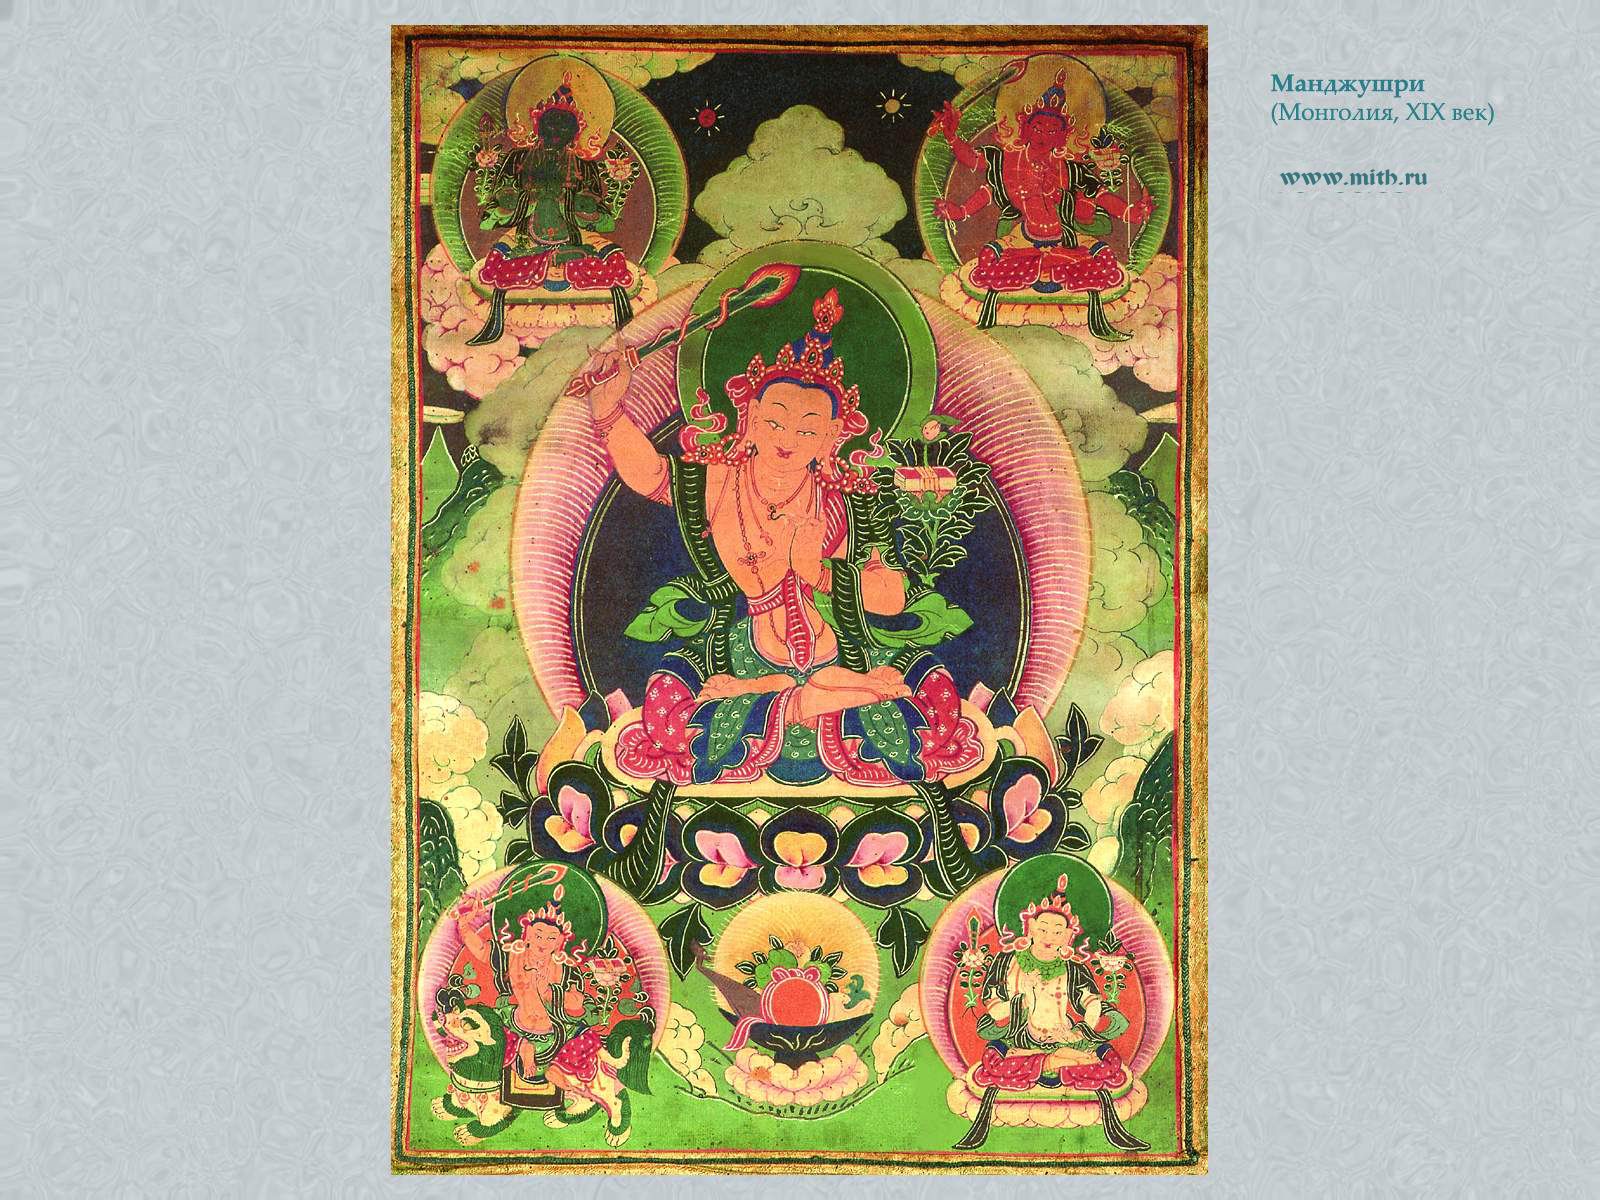 пять форм Манджушри

перейти к книге 'Тибетская живопись'